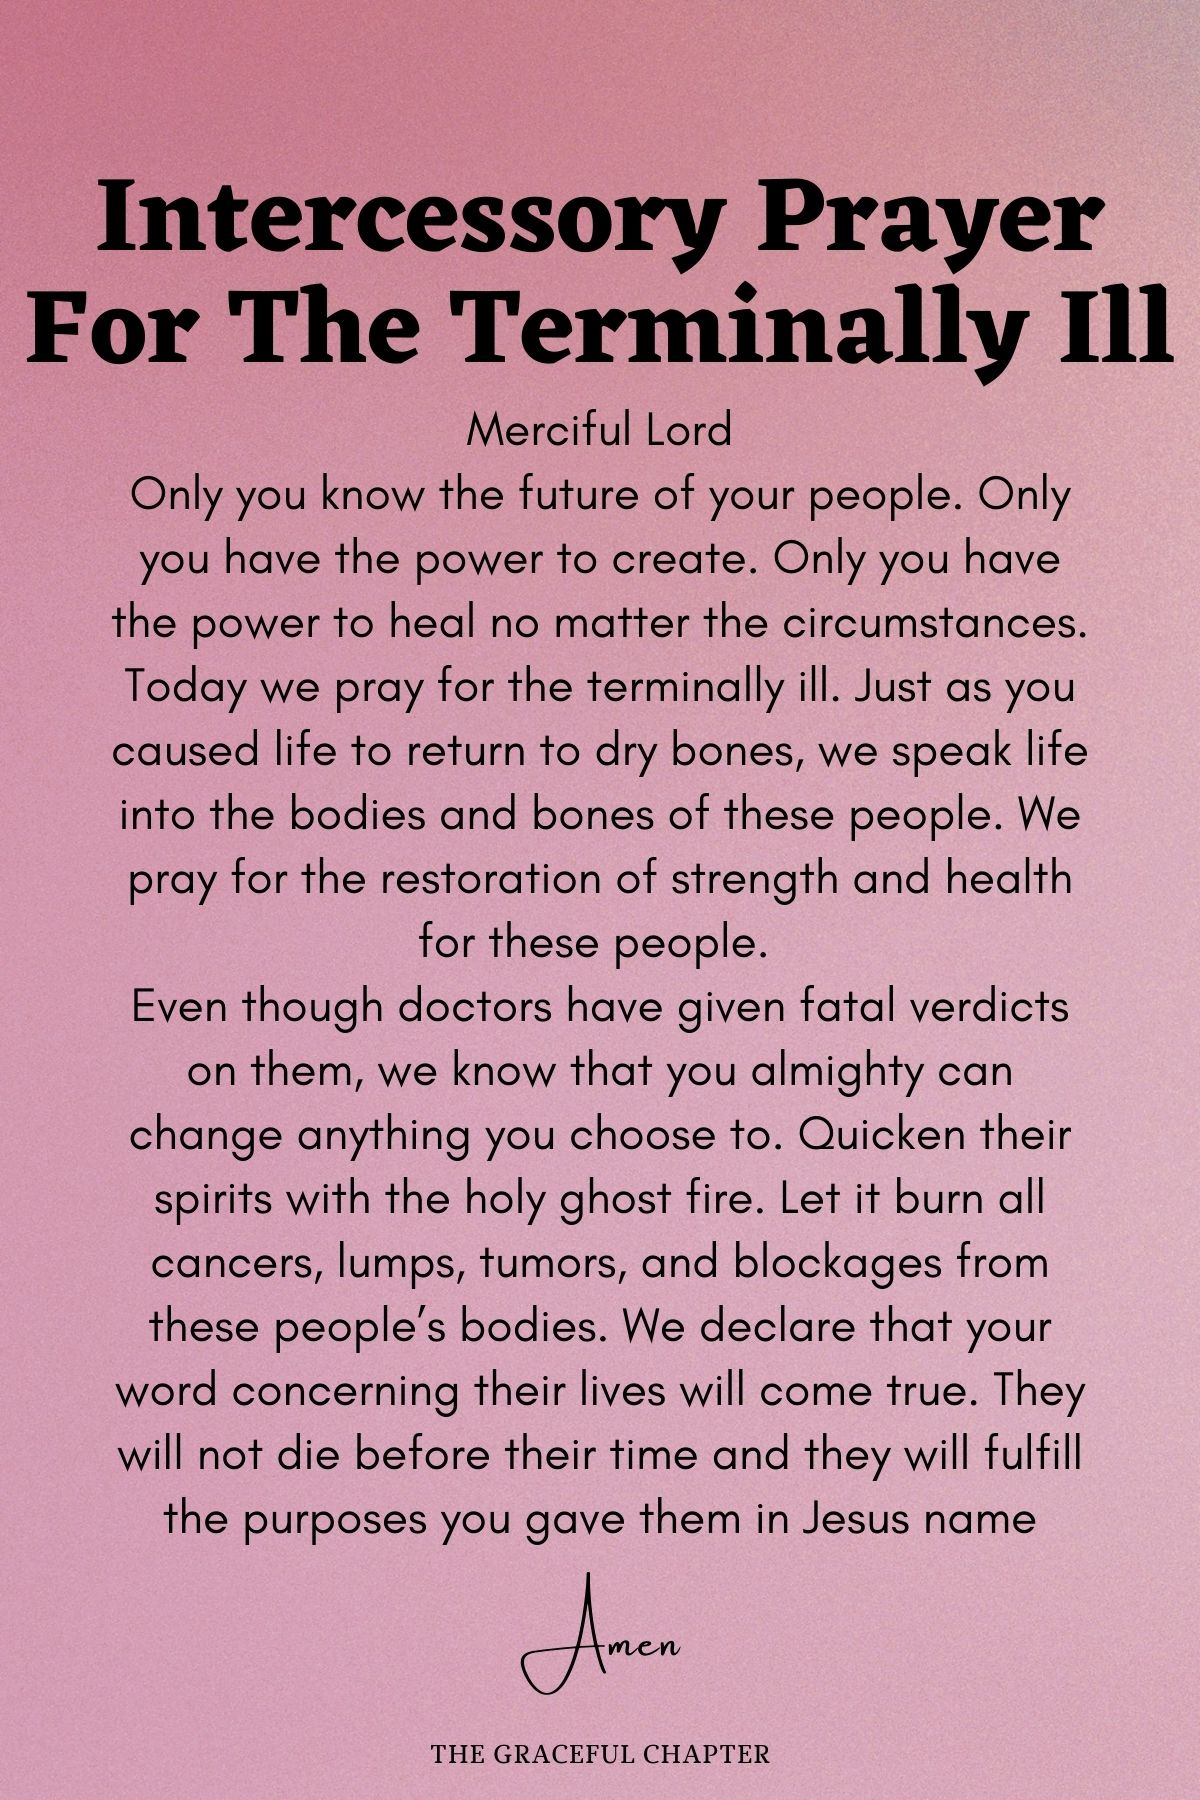  Intercessory prayer for the terminally ill